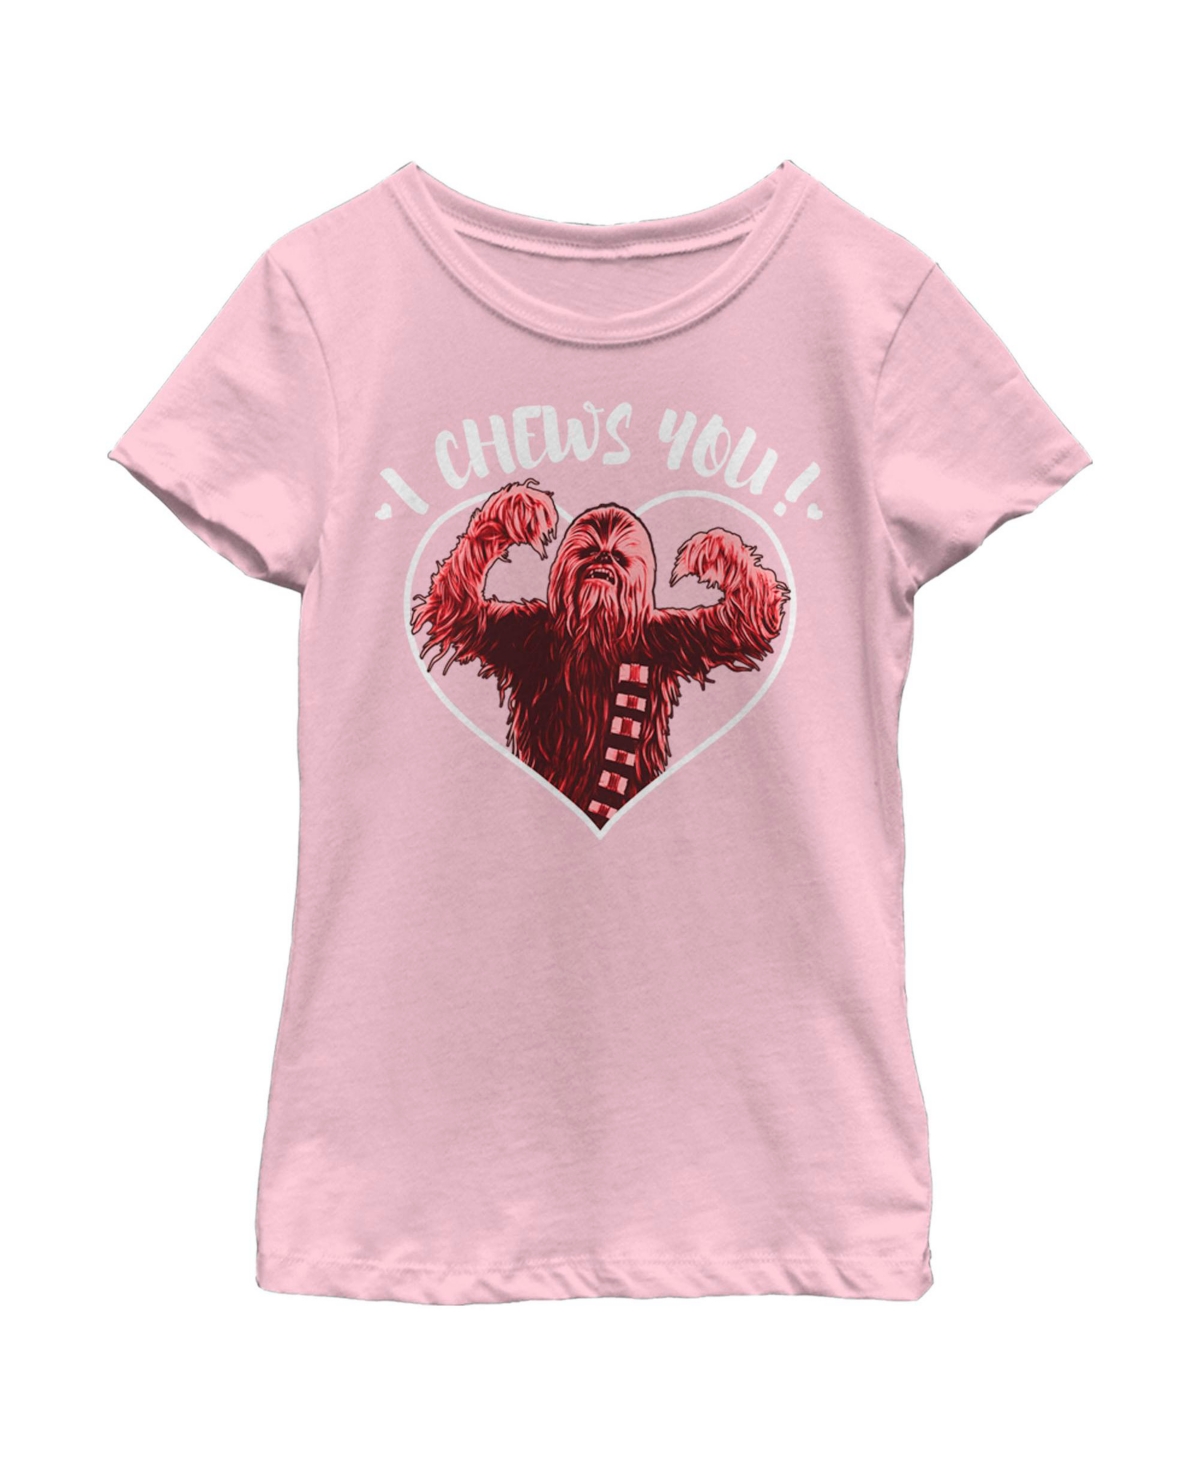 Disney Lucasfilm Girl's Star Wars Valentine's Day I Chews You Child T-shirt In Light Pink